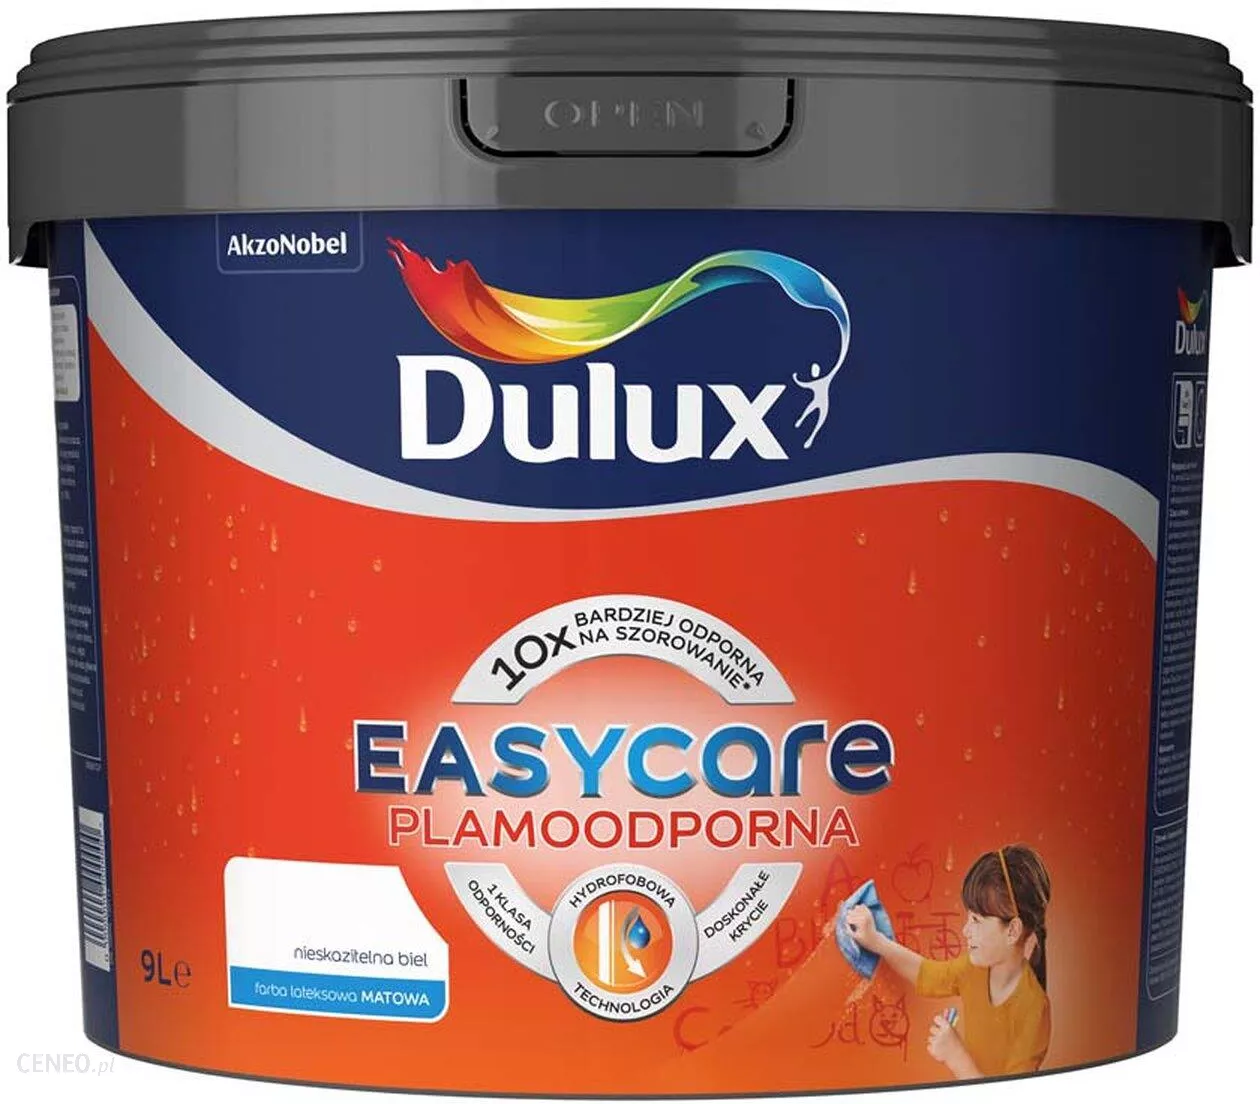 Farba do ścian i sufitów lateksowa Dulux EasyCare Nieskazitelna biel mat 9L